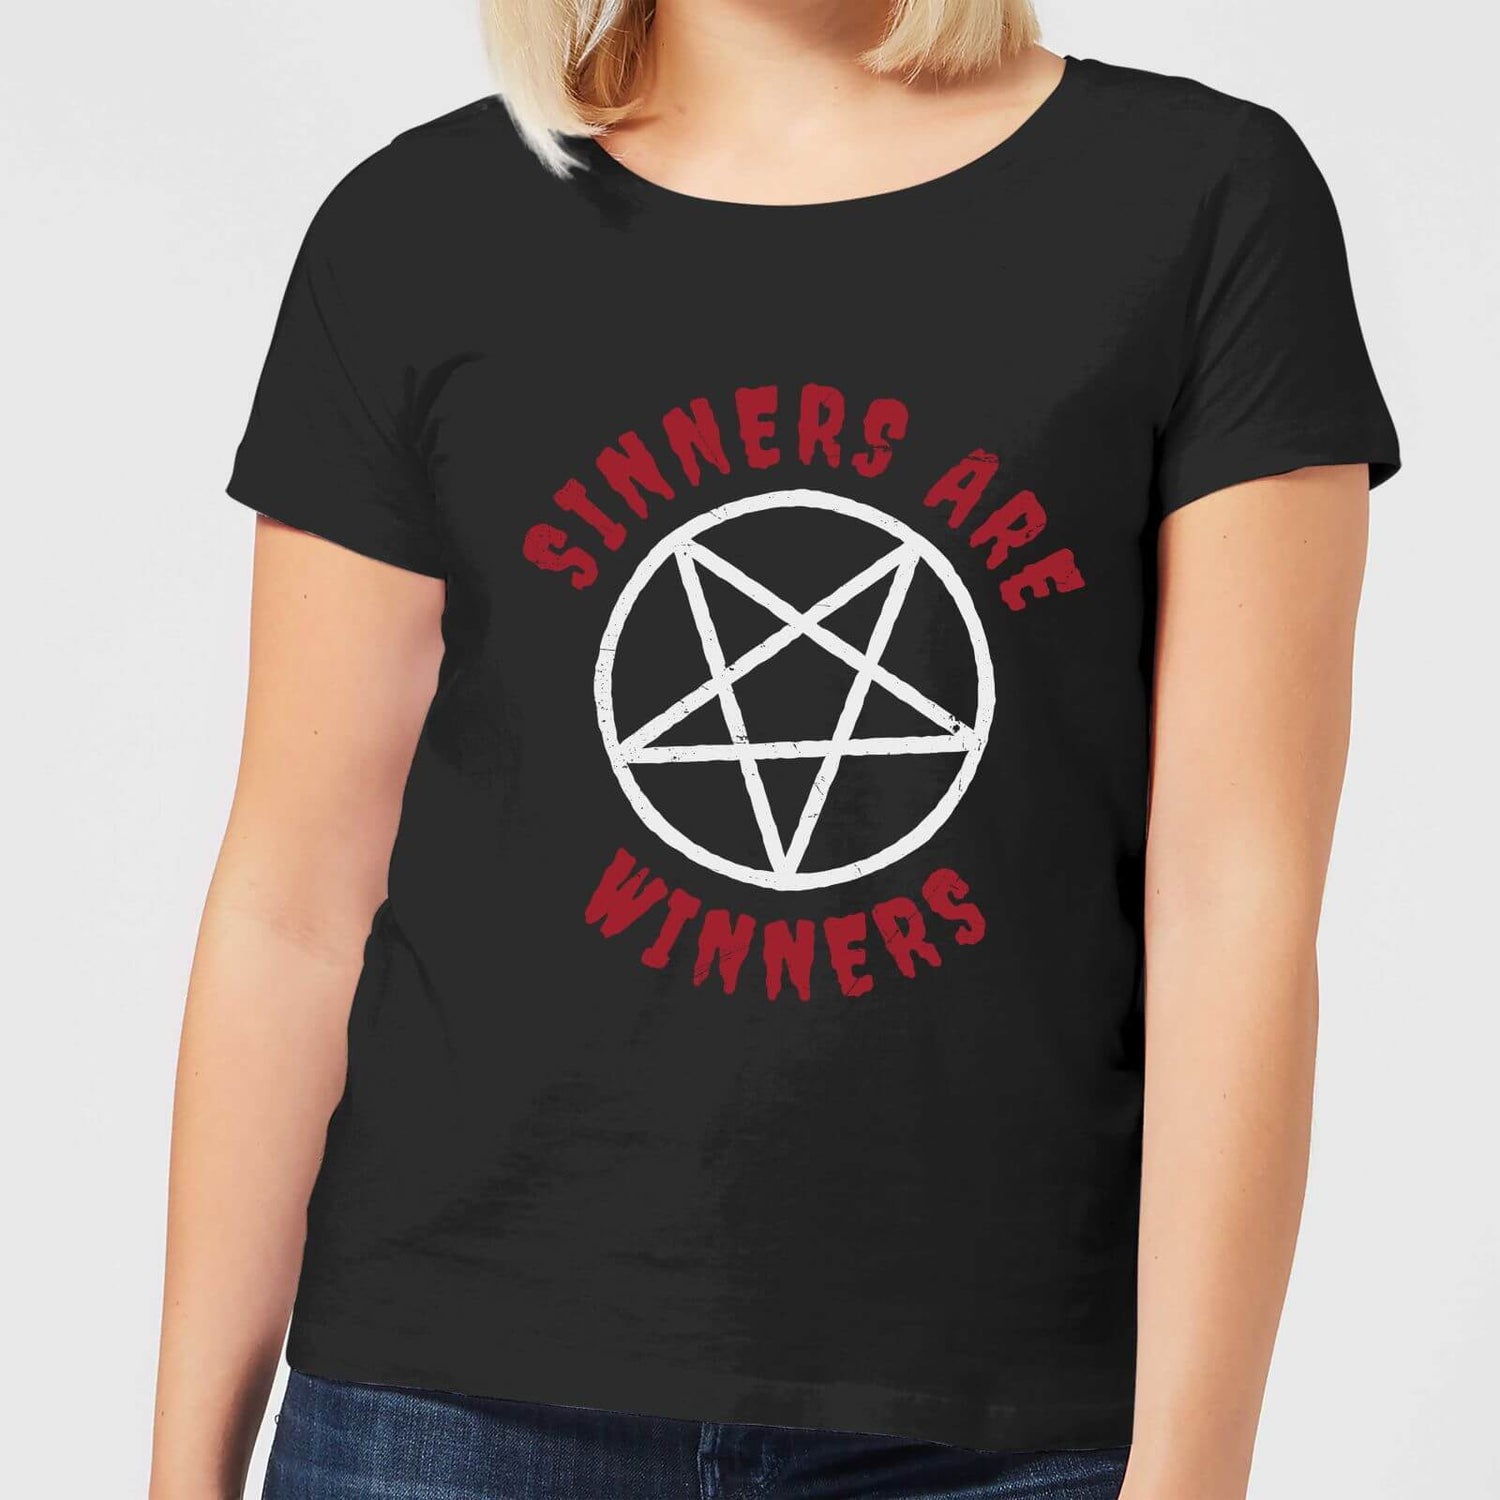 Sinners are Winners Women's T-Shirt - Black